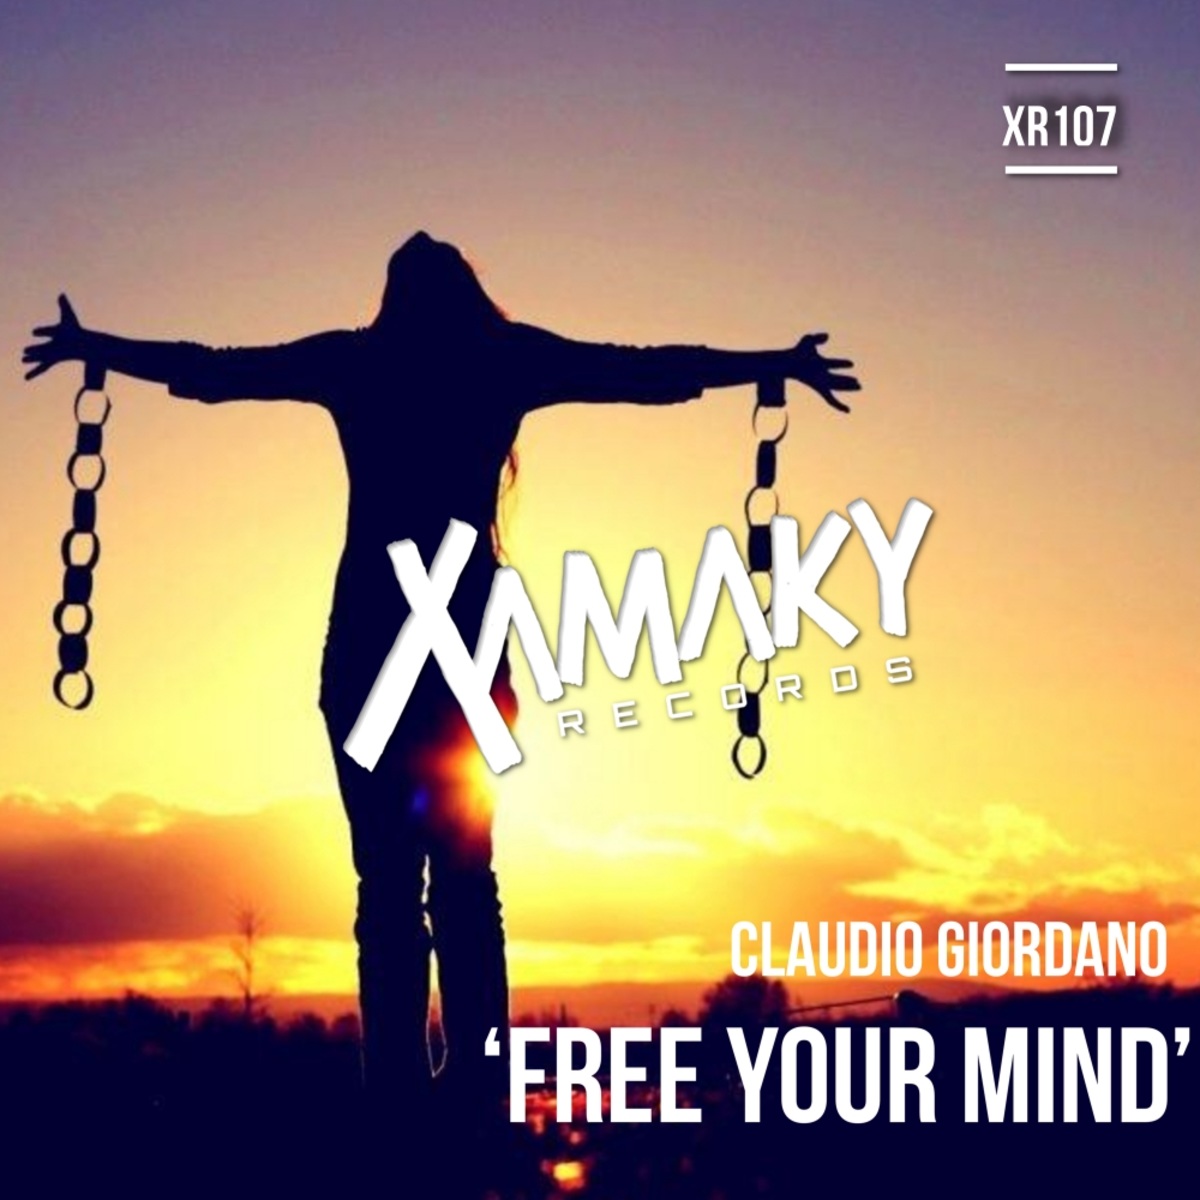 Claudio Giordano - Free Your Mind / Xamaky Records